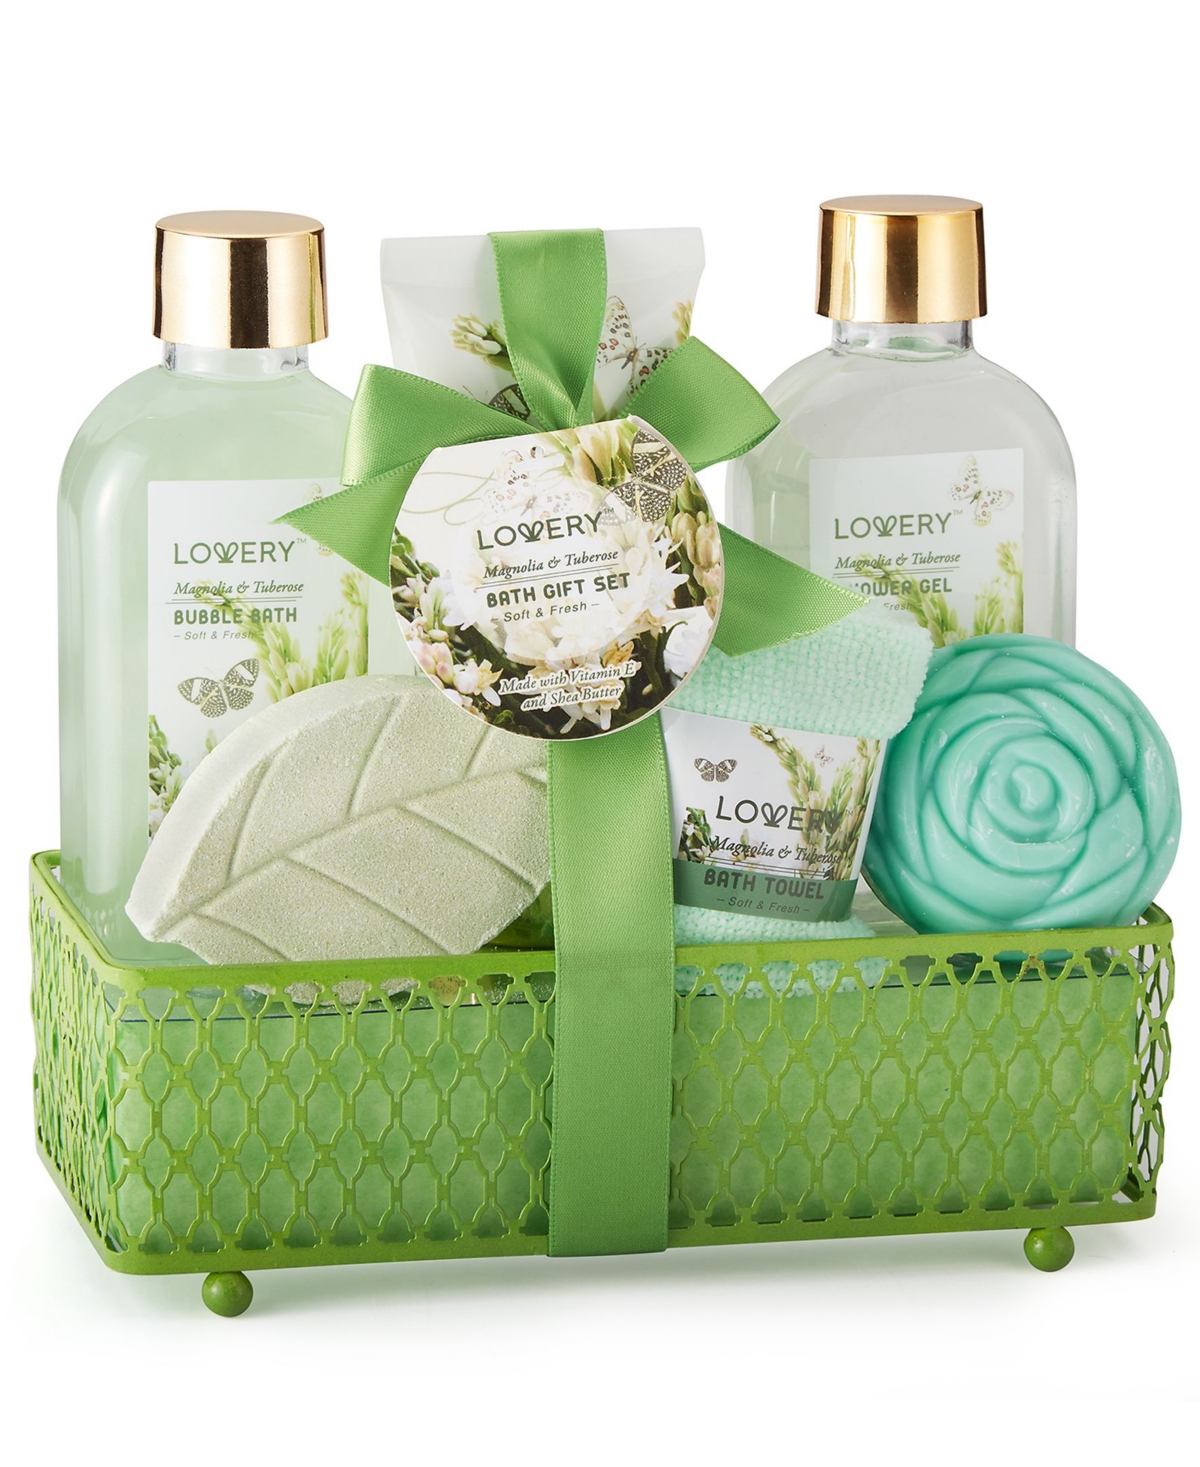 Magnolia Tuberose Home Spa Bath Kit and Body Care Gift Set, 7 Piece